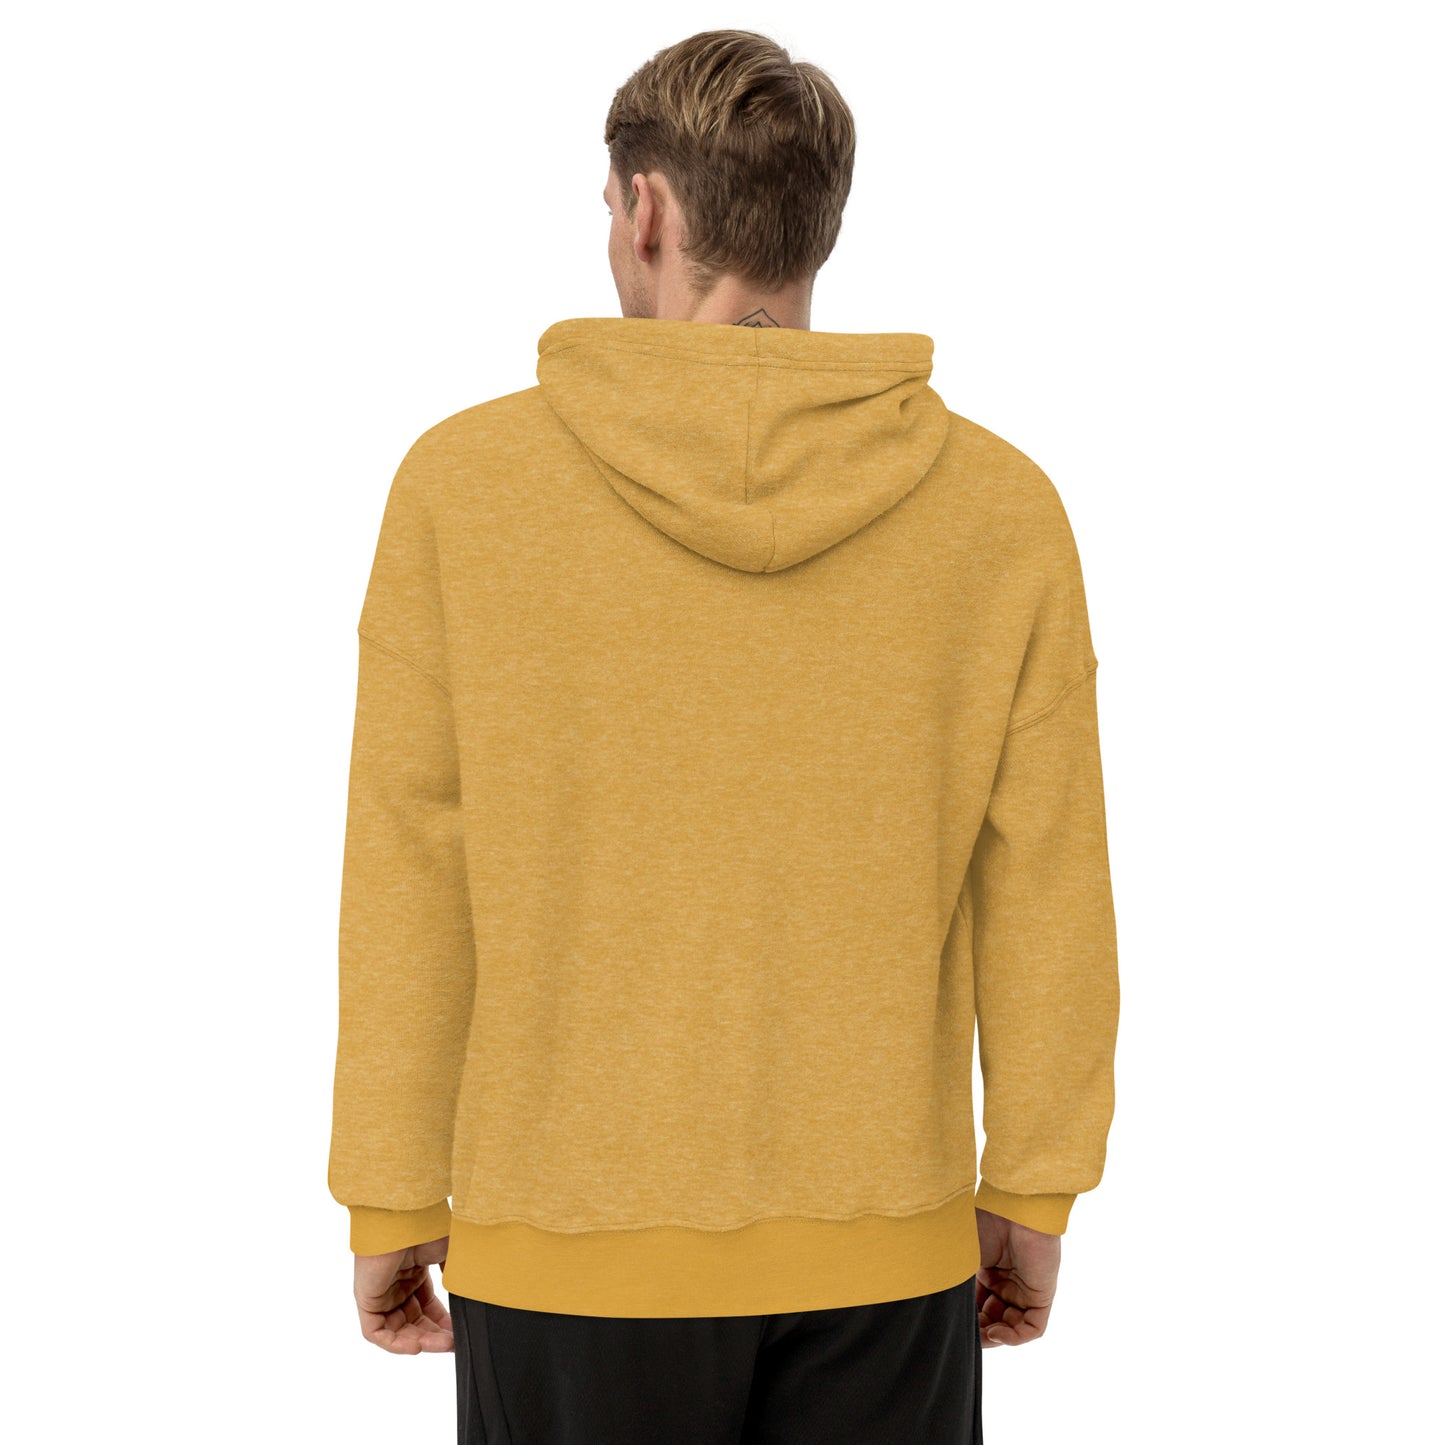 BTH Unisex sueded fleece hoodie